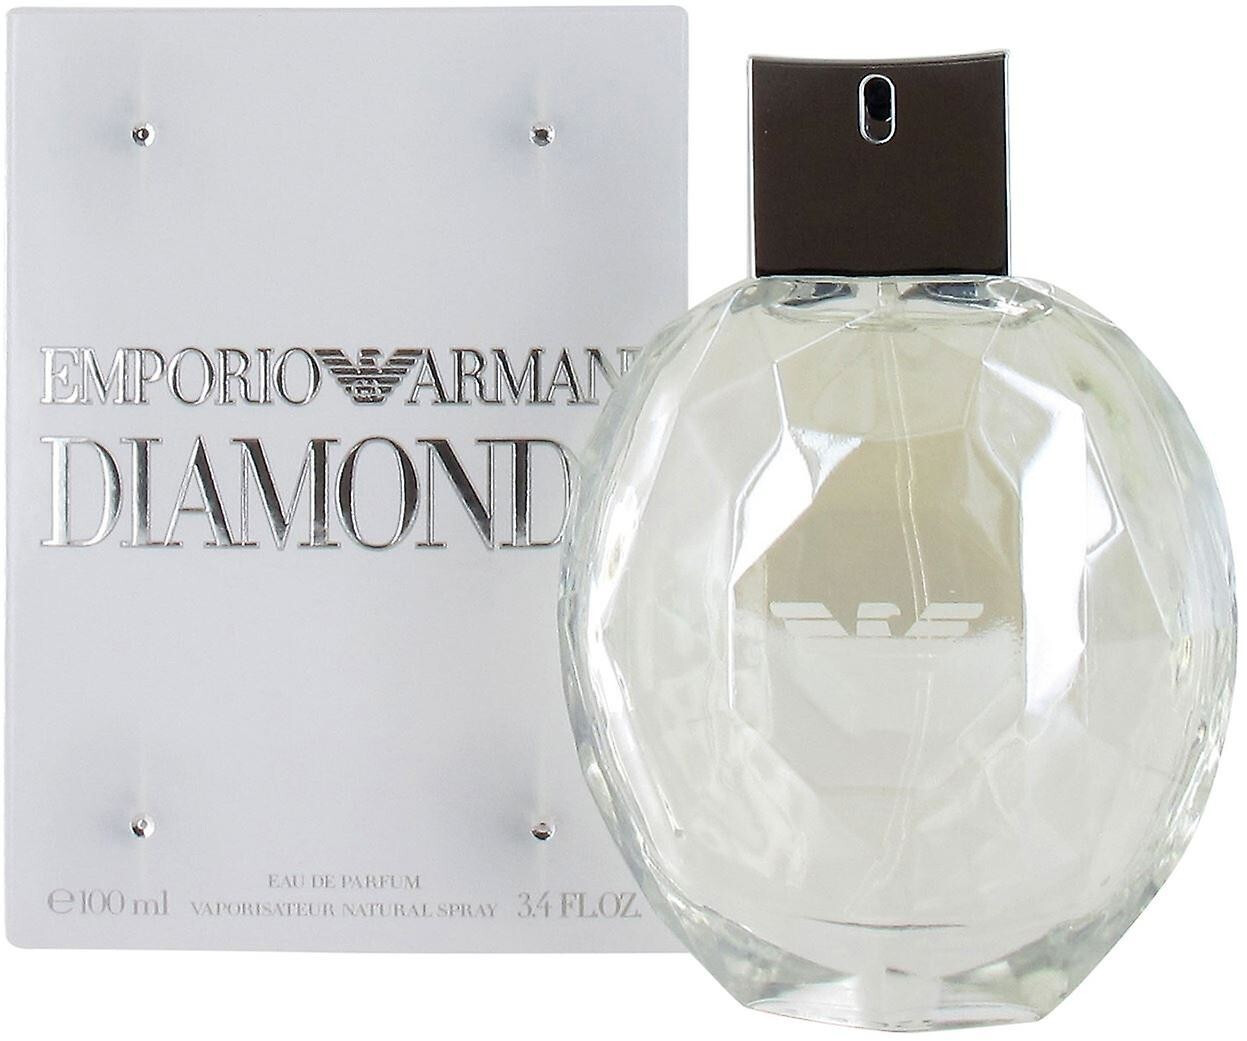 Buy Emporio Armani Diamonds Eau de Parfum (100ml) from £37.95 (Today ...